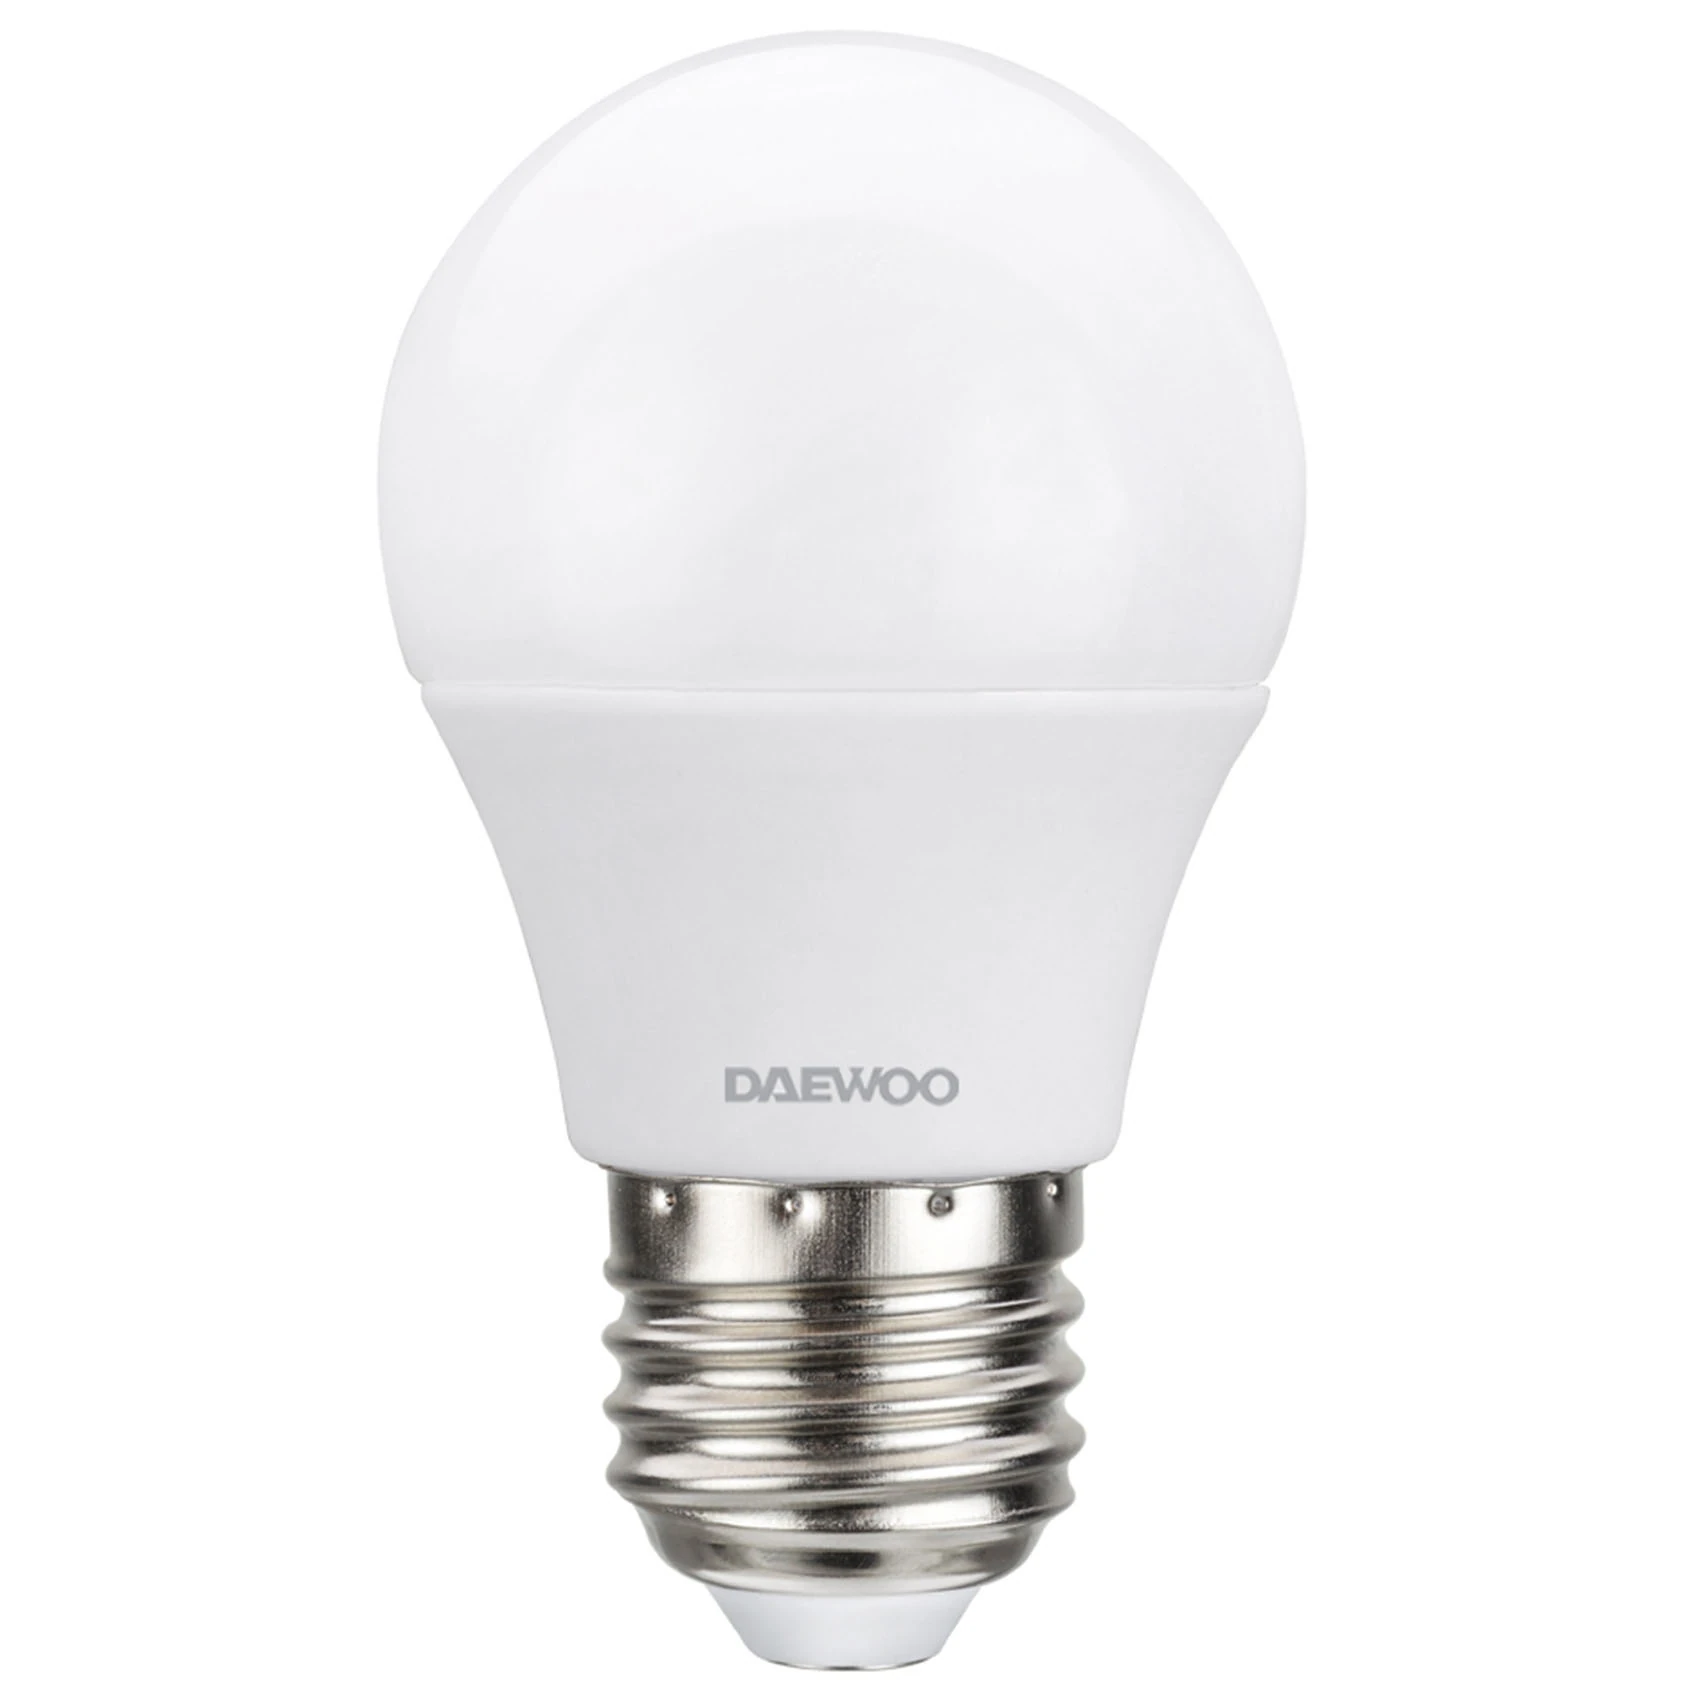 DAEWOO ENERGY SAVING LED BULB E27-5W DL2705DN WARM WHITE